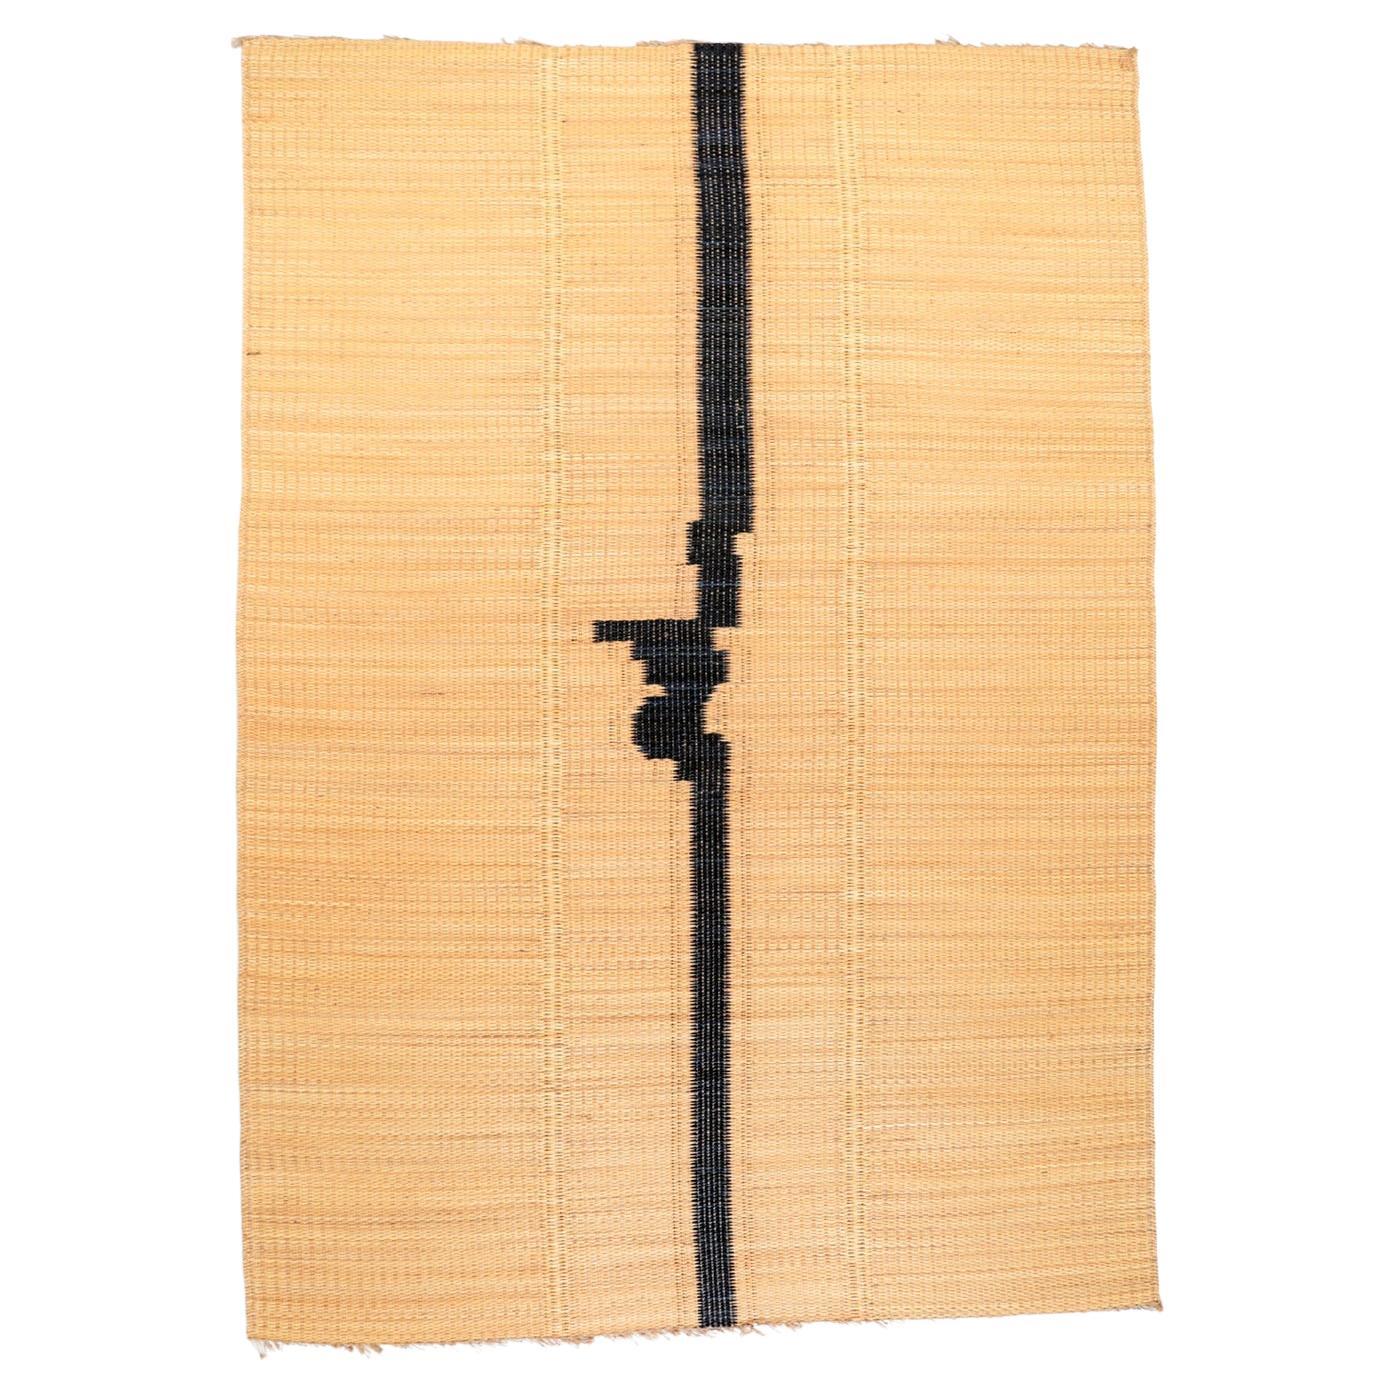 Handmade Rug in Natural Fiber with Striped Oriental Design La Fibre Artisanale